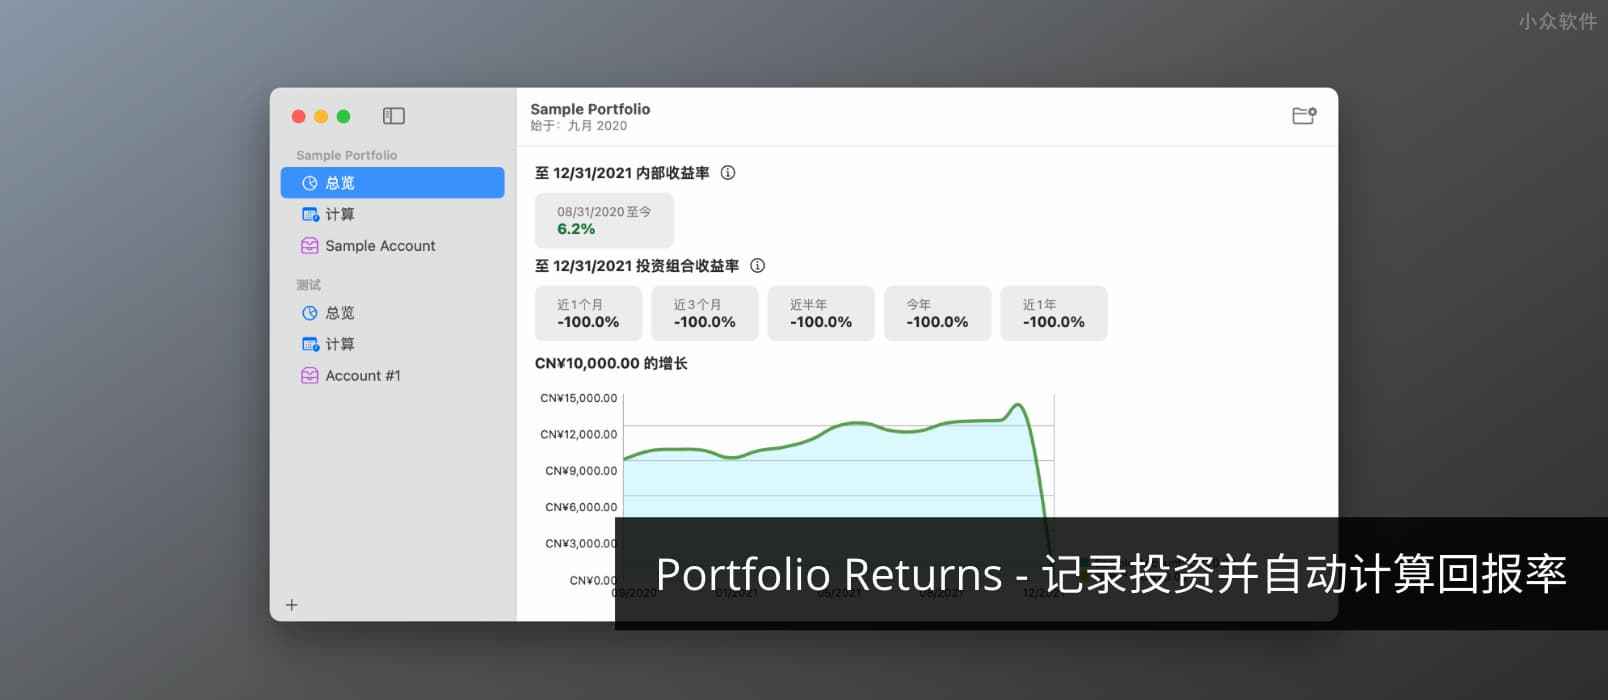 Portfolio Returns - 2个步骤，记录投资并自动计算回报率[macOS]